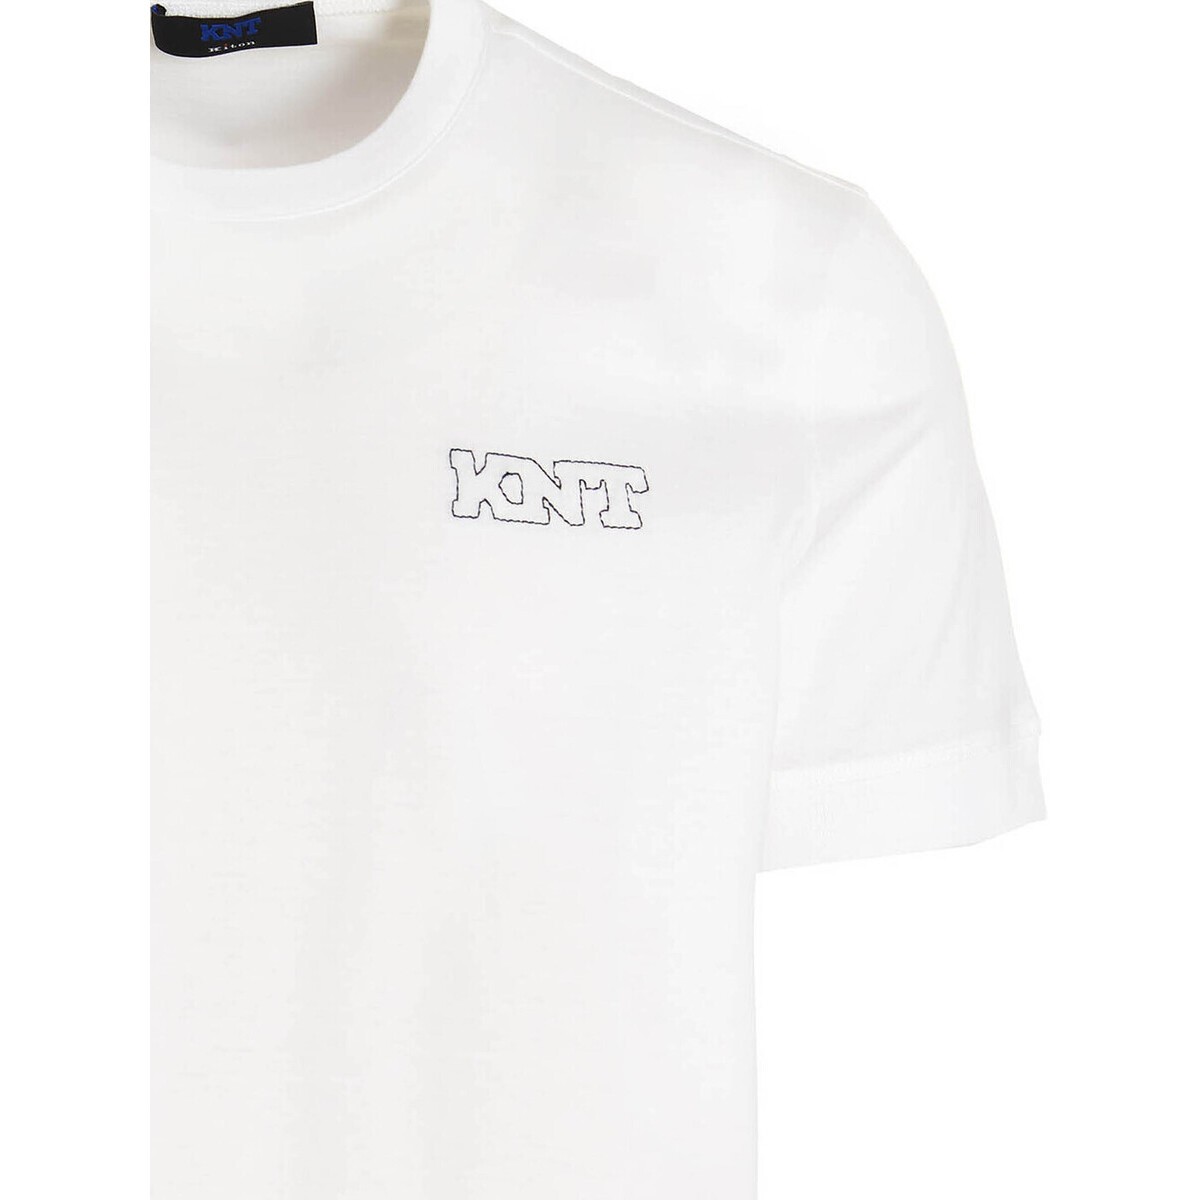 KITON キートン White Logo Embroidery T-shirt Tシャツ メンズ 春夏